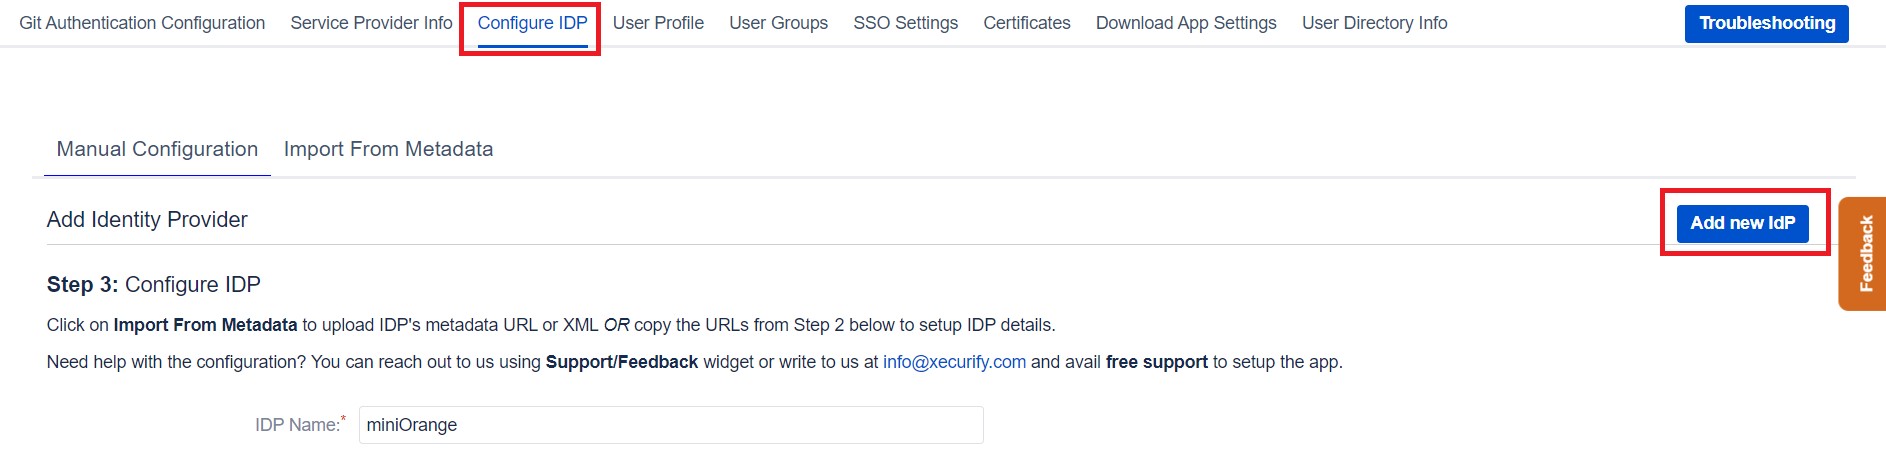 SAML Single Sign On (SSO) into Bitbucket Service Provider, Add Second IDP